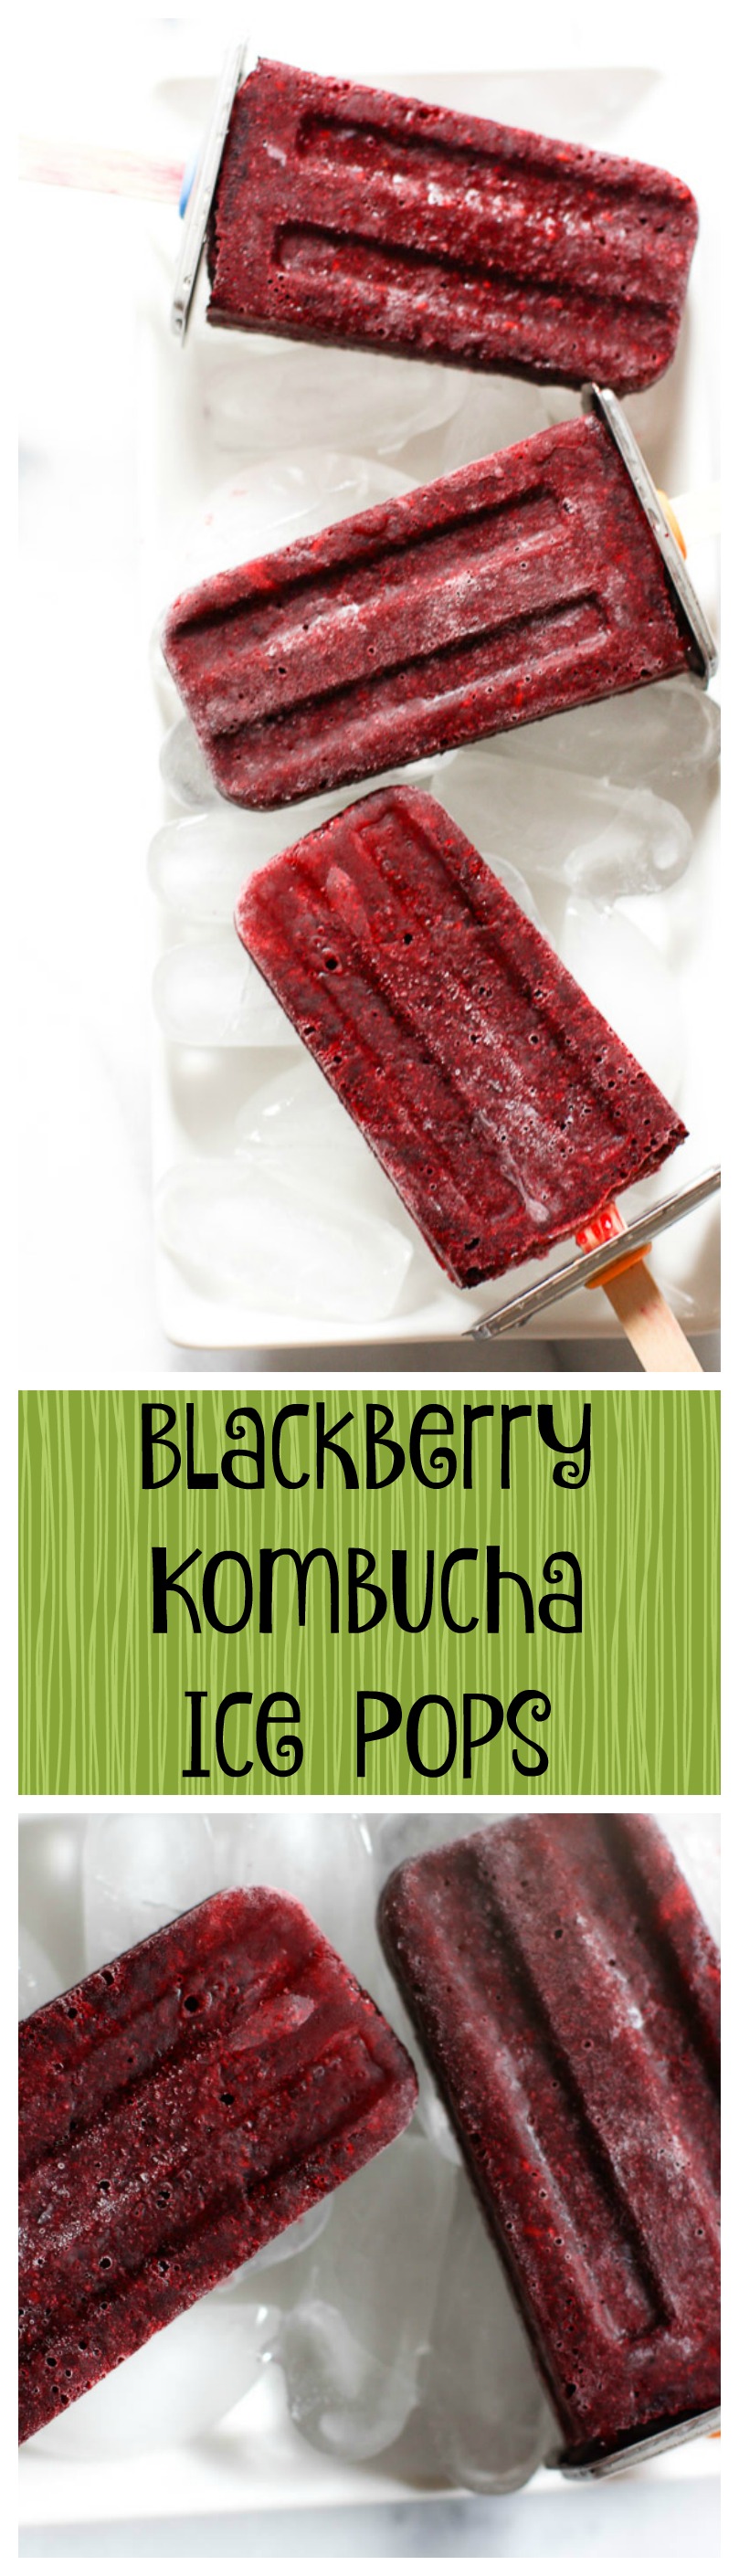 blackberry kombucha ice pops